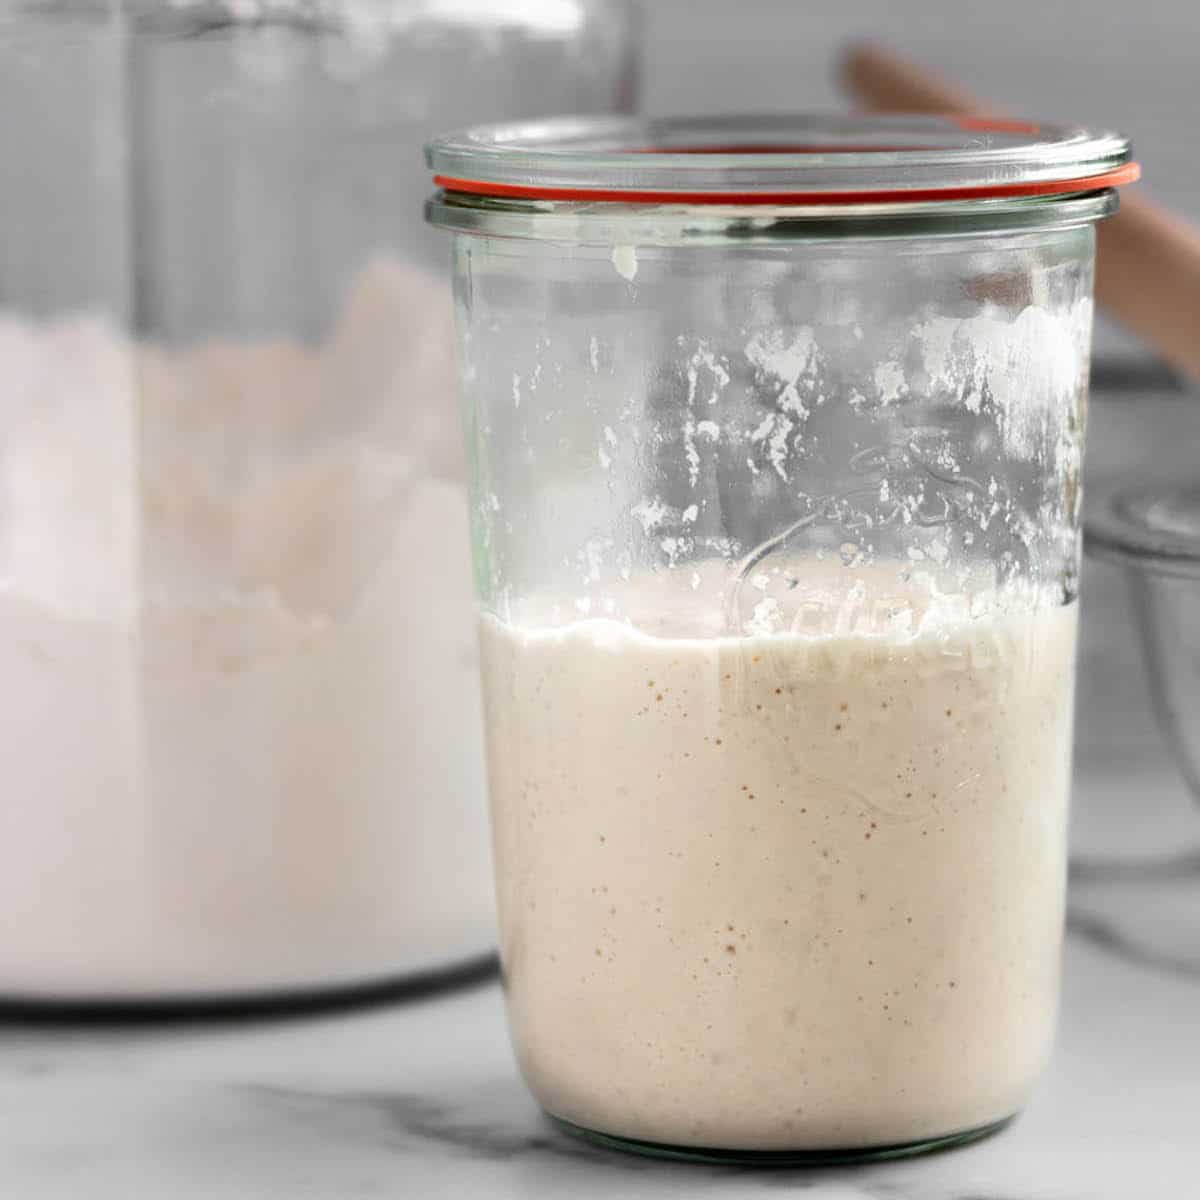 A glass jar with sourdough starter discard, flour and a dough whisk.